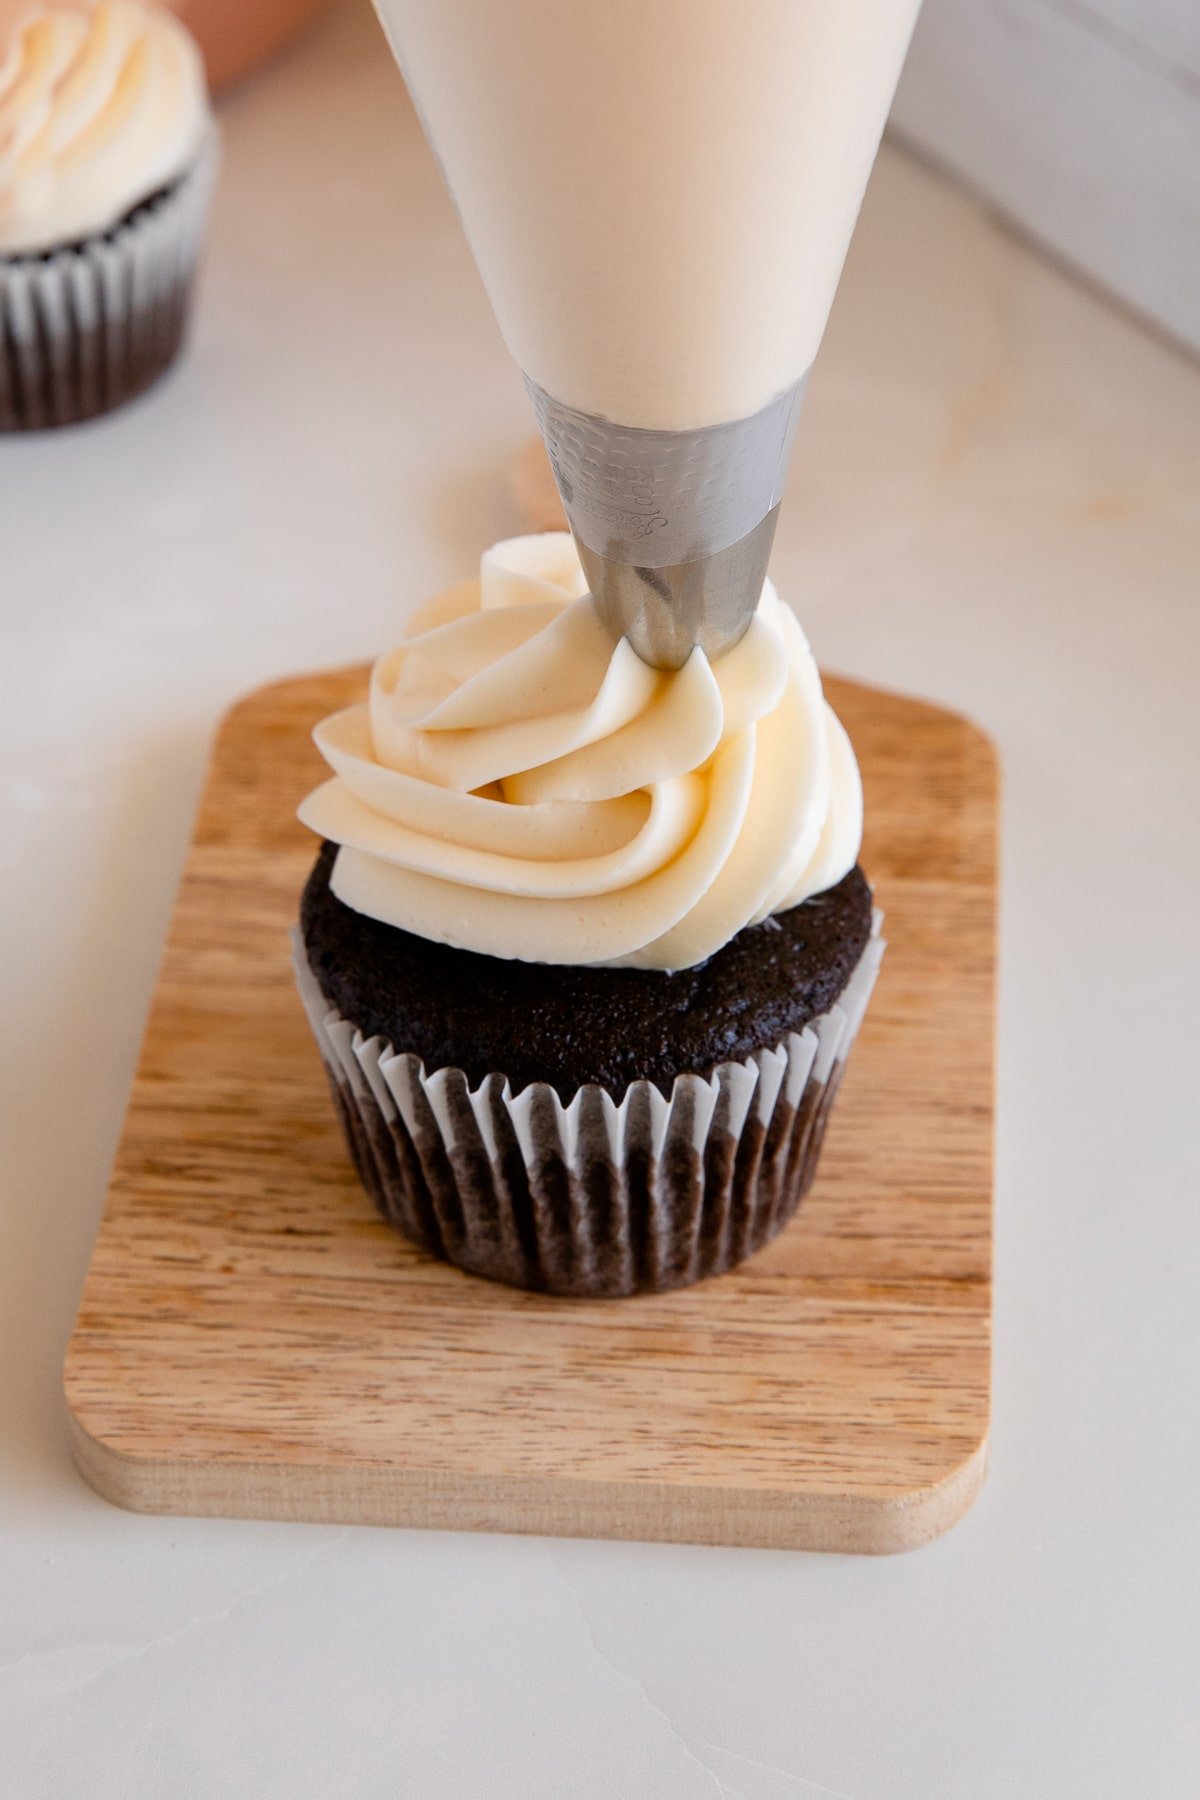 piping Swiss meringue buttercream on cupcake.